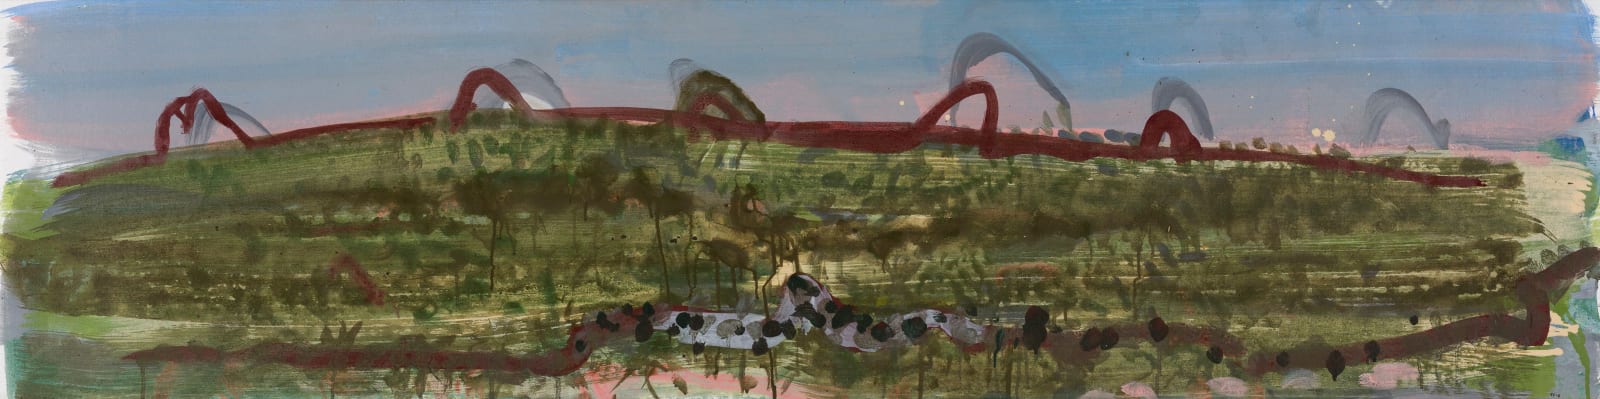 Joe Furlonger, The Glasshouse Mountains (Horizon Series) XVII, 2010